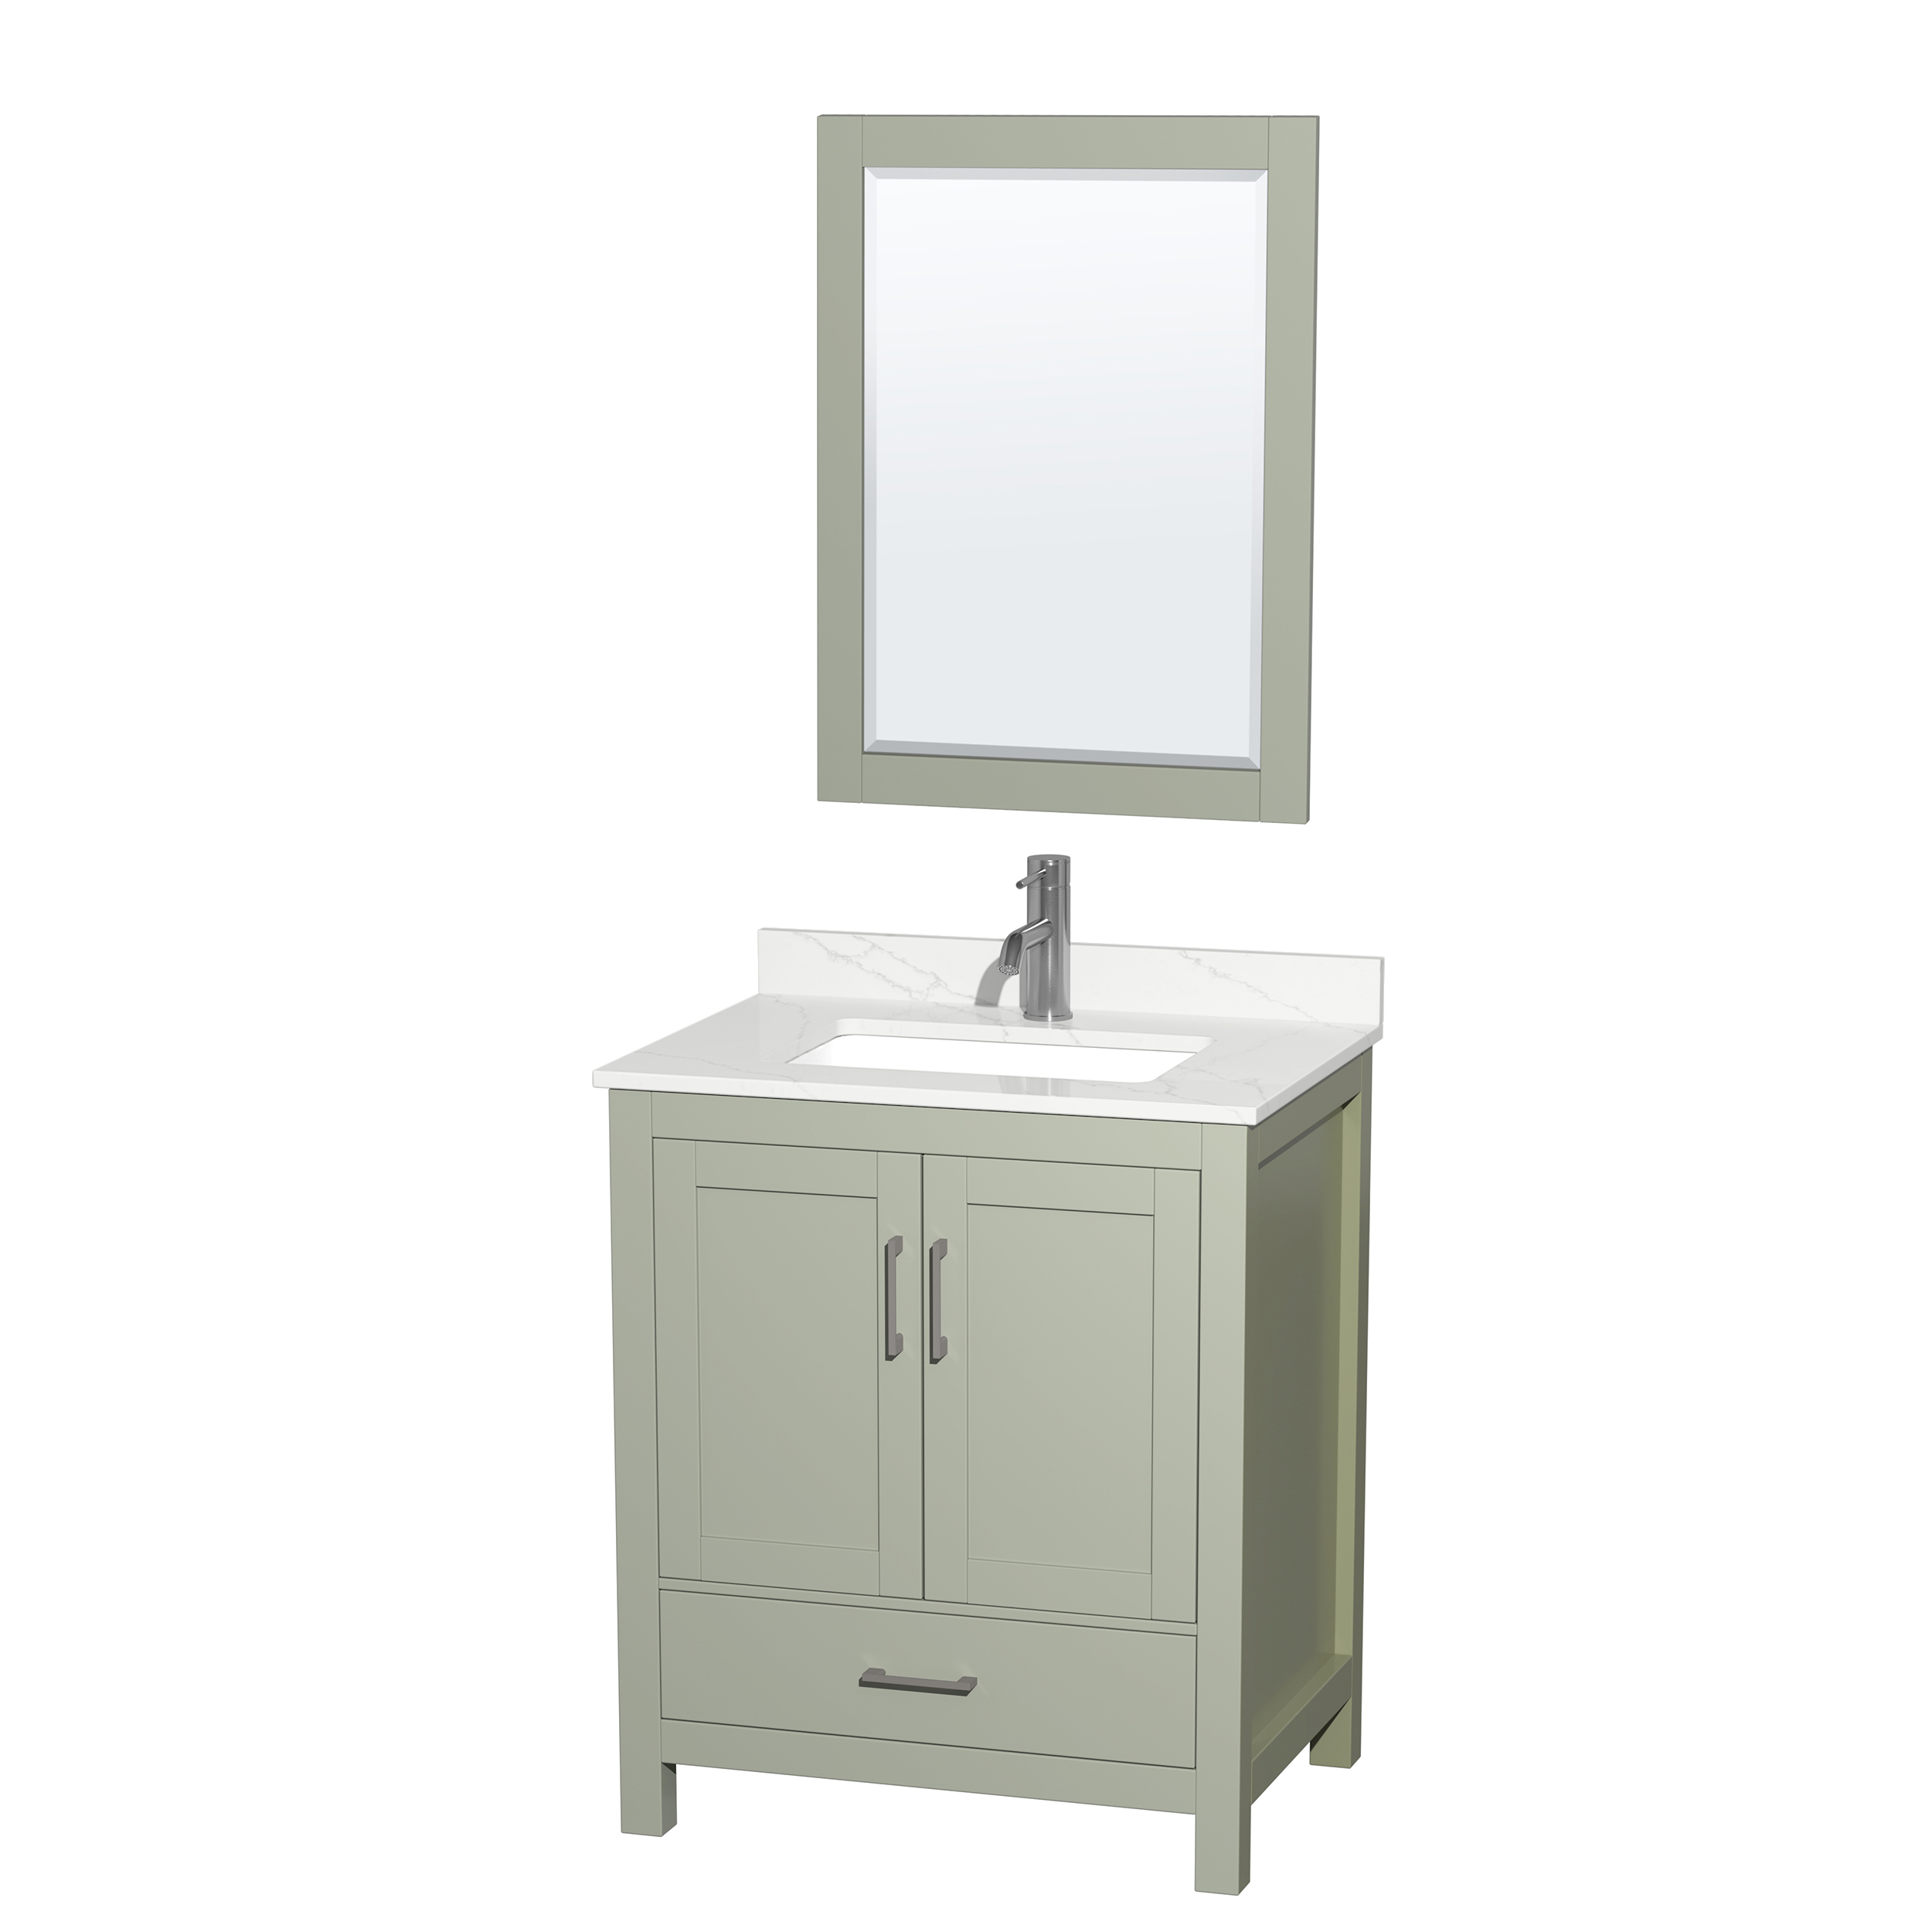 sheffield 30" single bathroom vanity by wyndham collection - light green